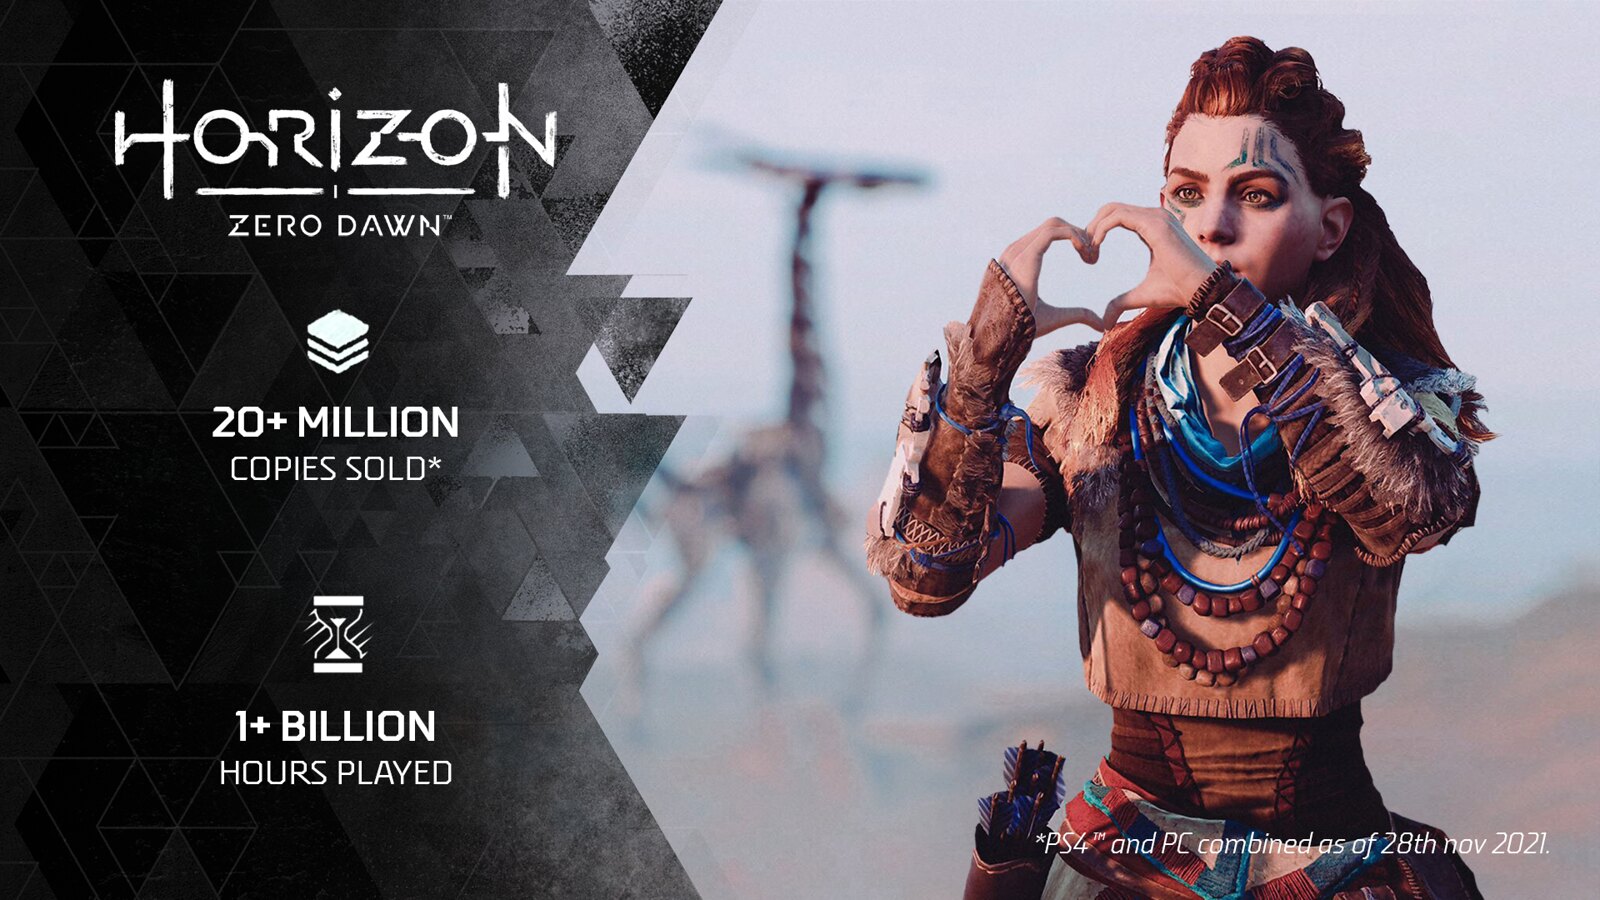 Horizon Zero Dawn has sold over 20 million copies